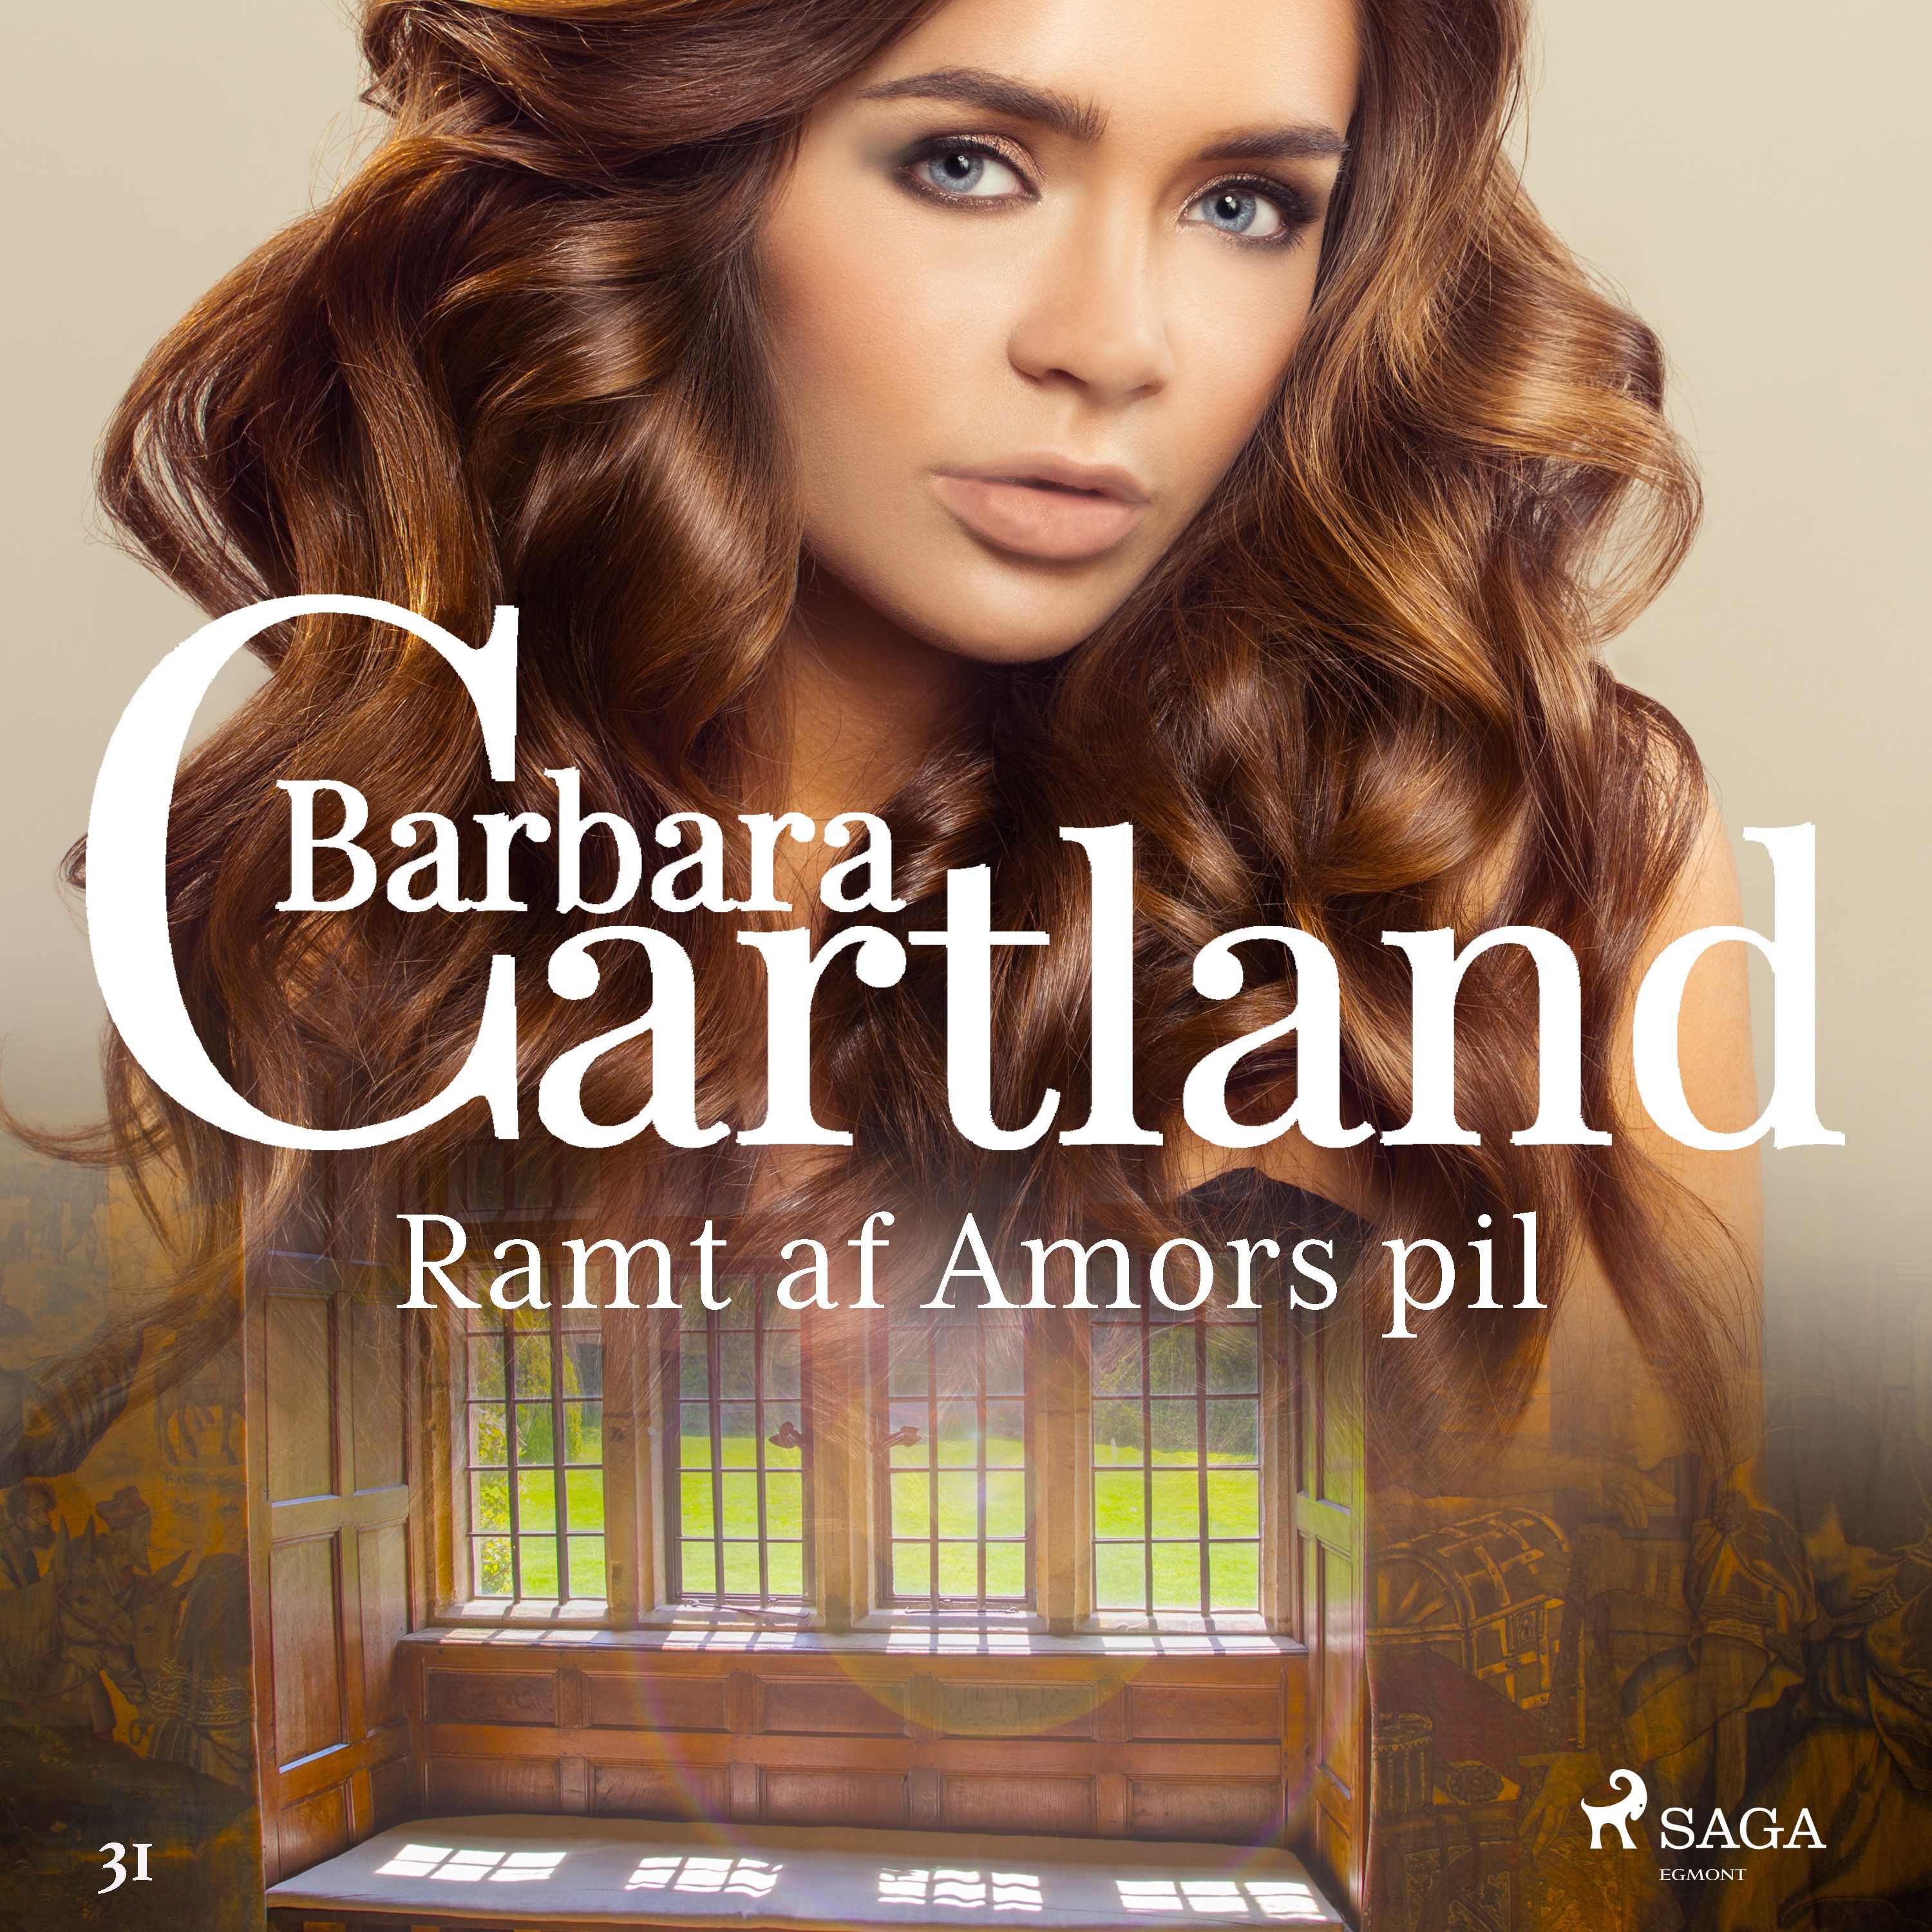 Ramt af Amors pil, audiobook by Barbara Cartland